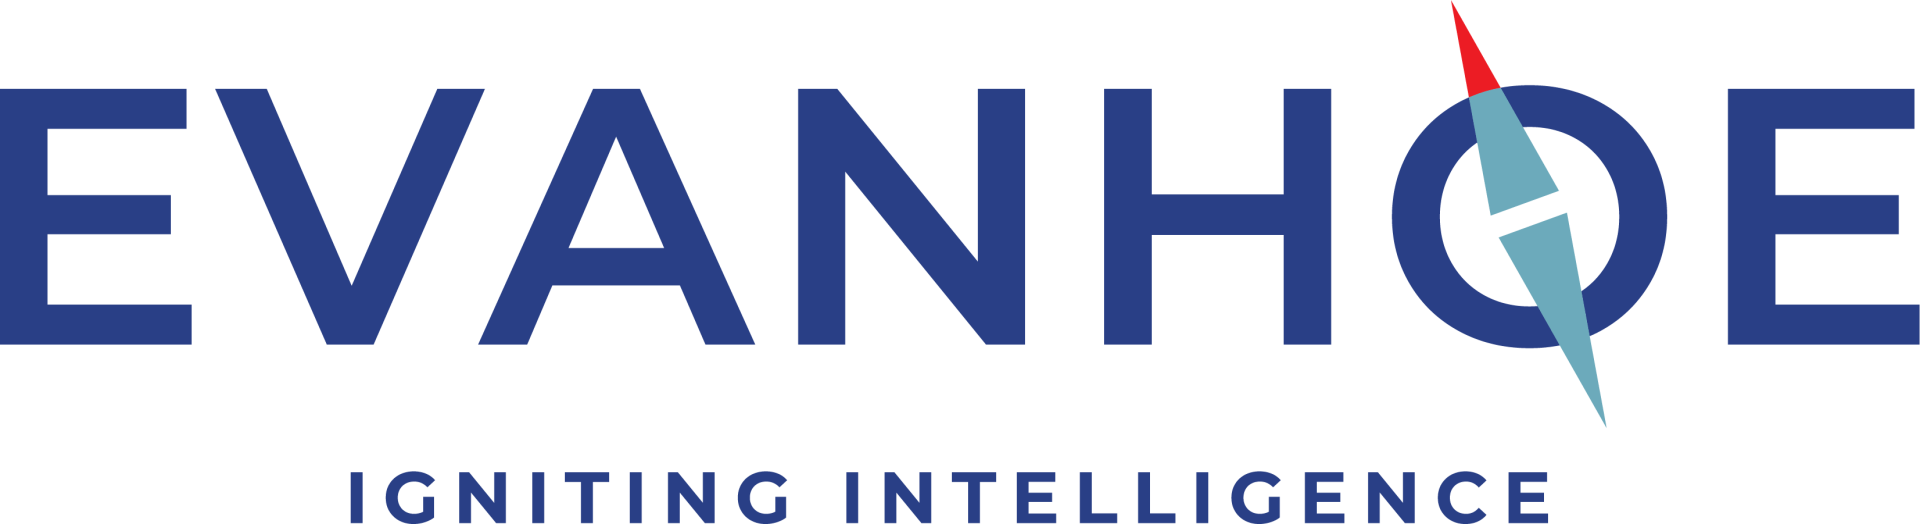 Evanhoe and Associates LLC Logo